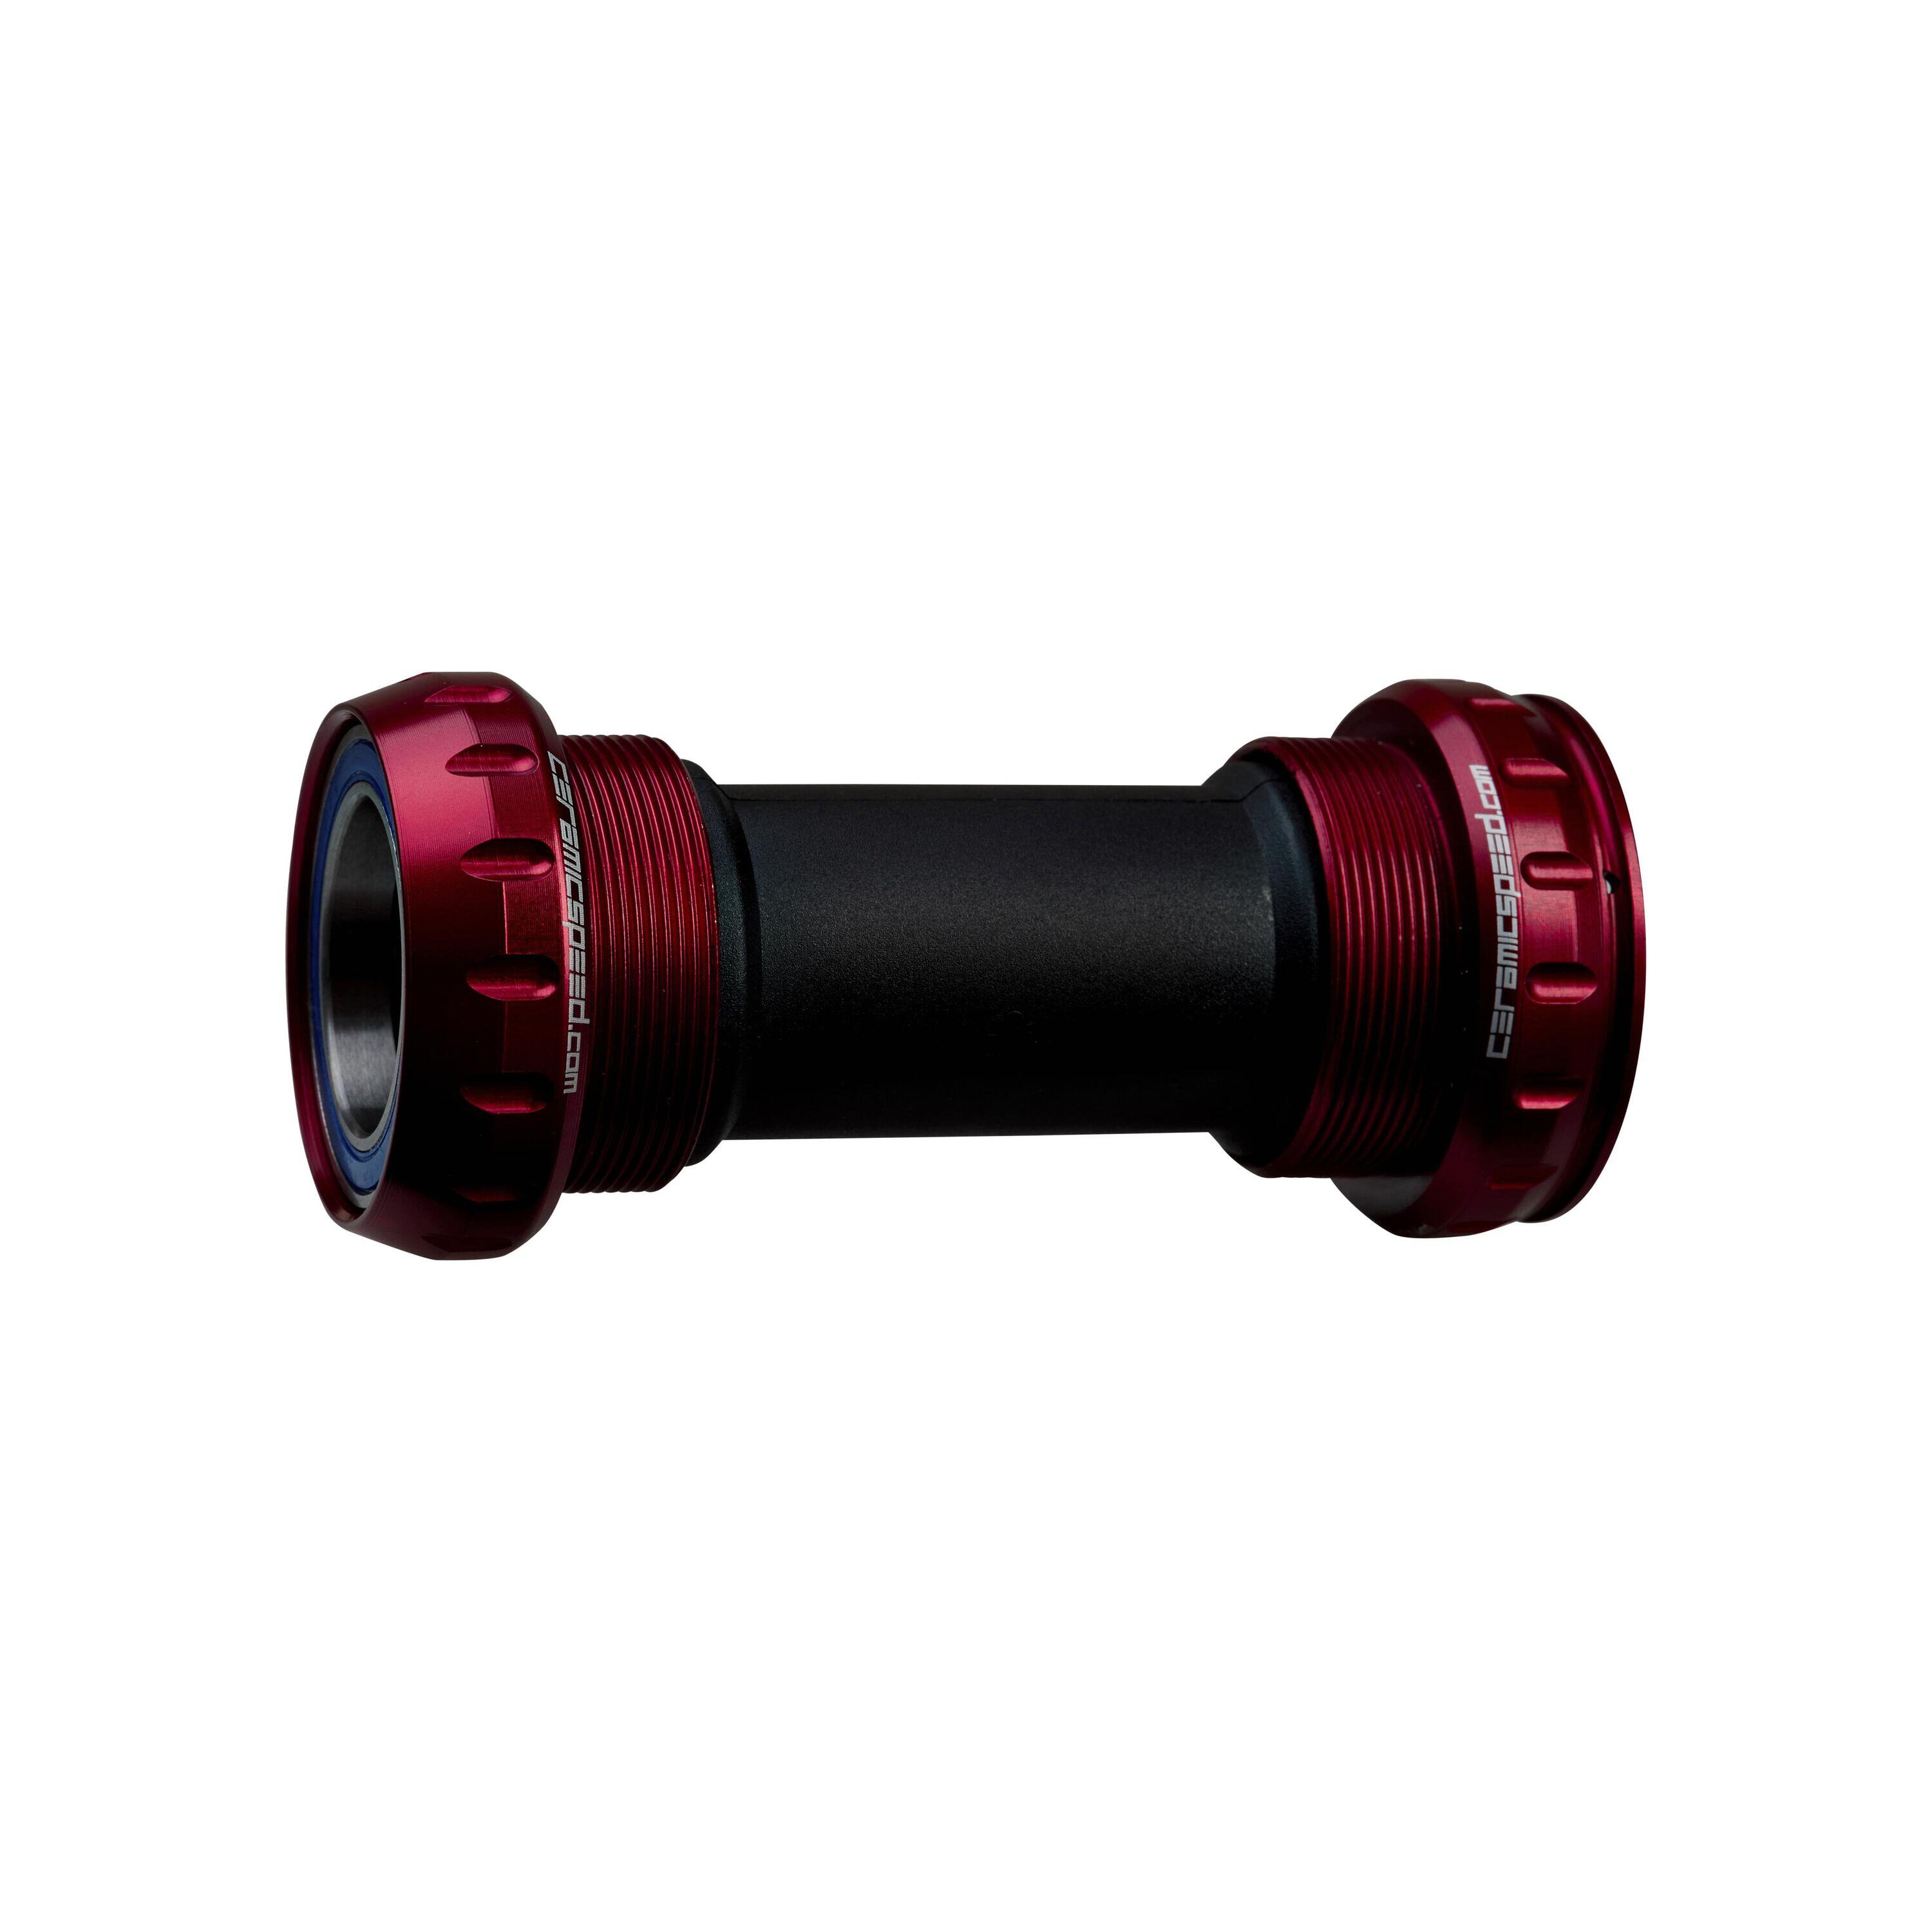 Нижний кронштейн CeramicSpeed ​​​​bsa Campagnolo 68mm ultratorque 25mm, красный / красный / красный